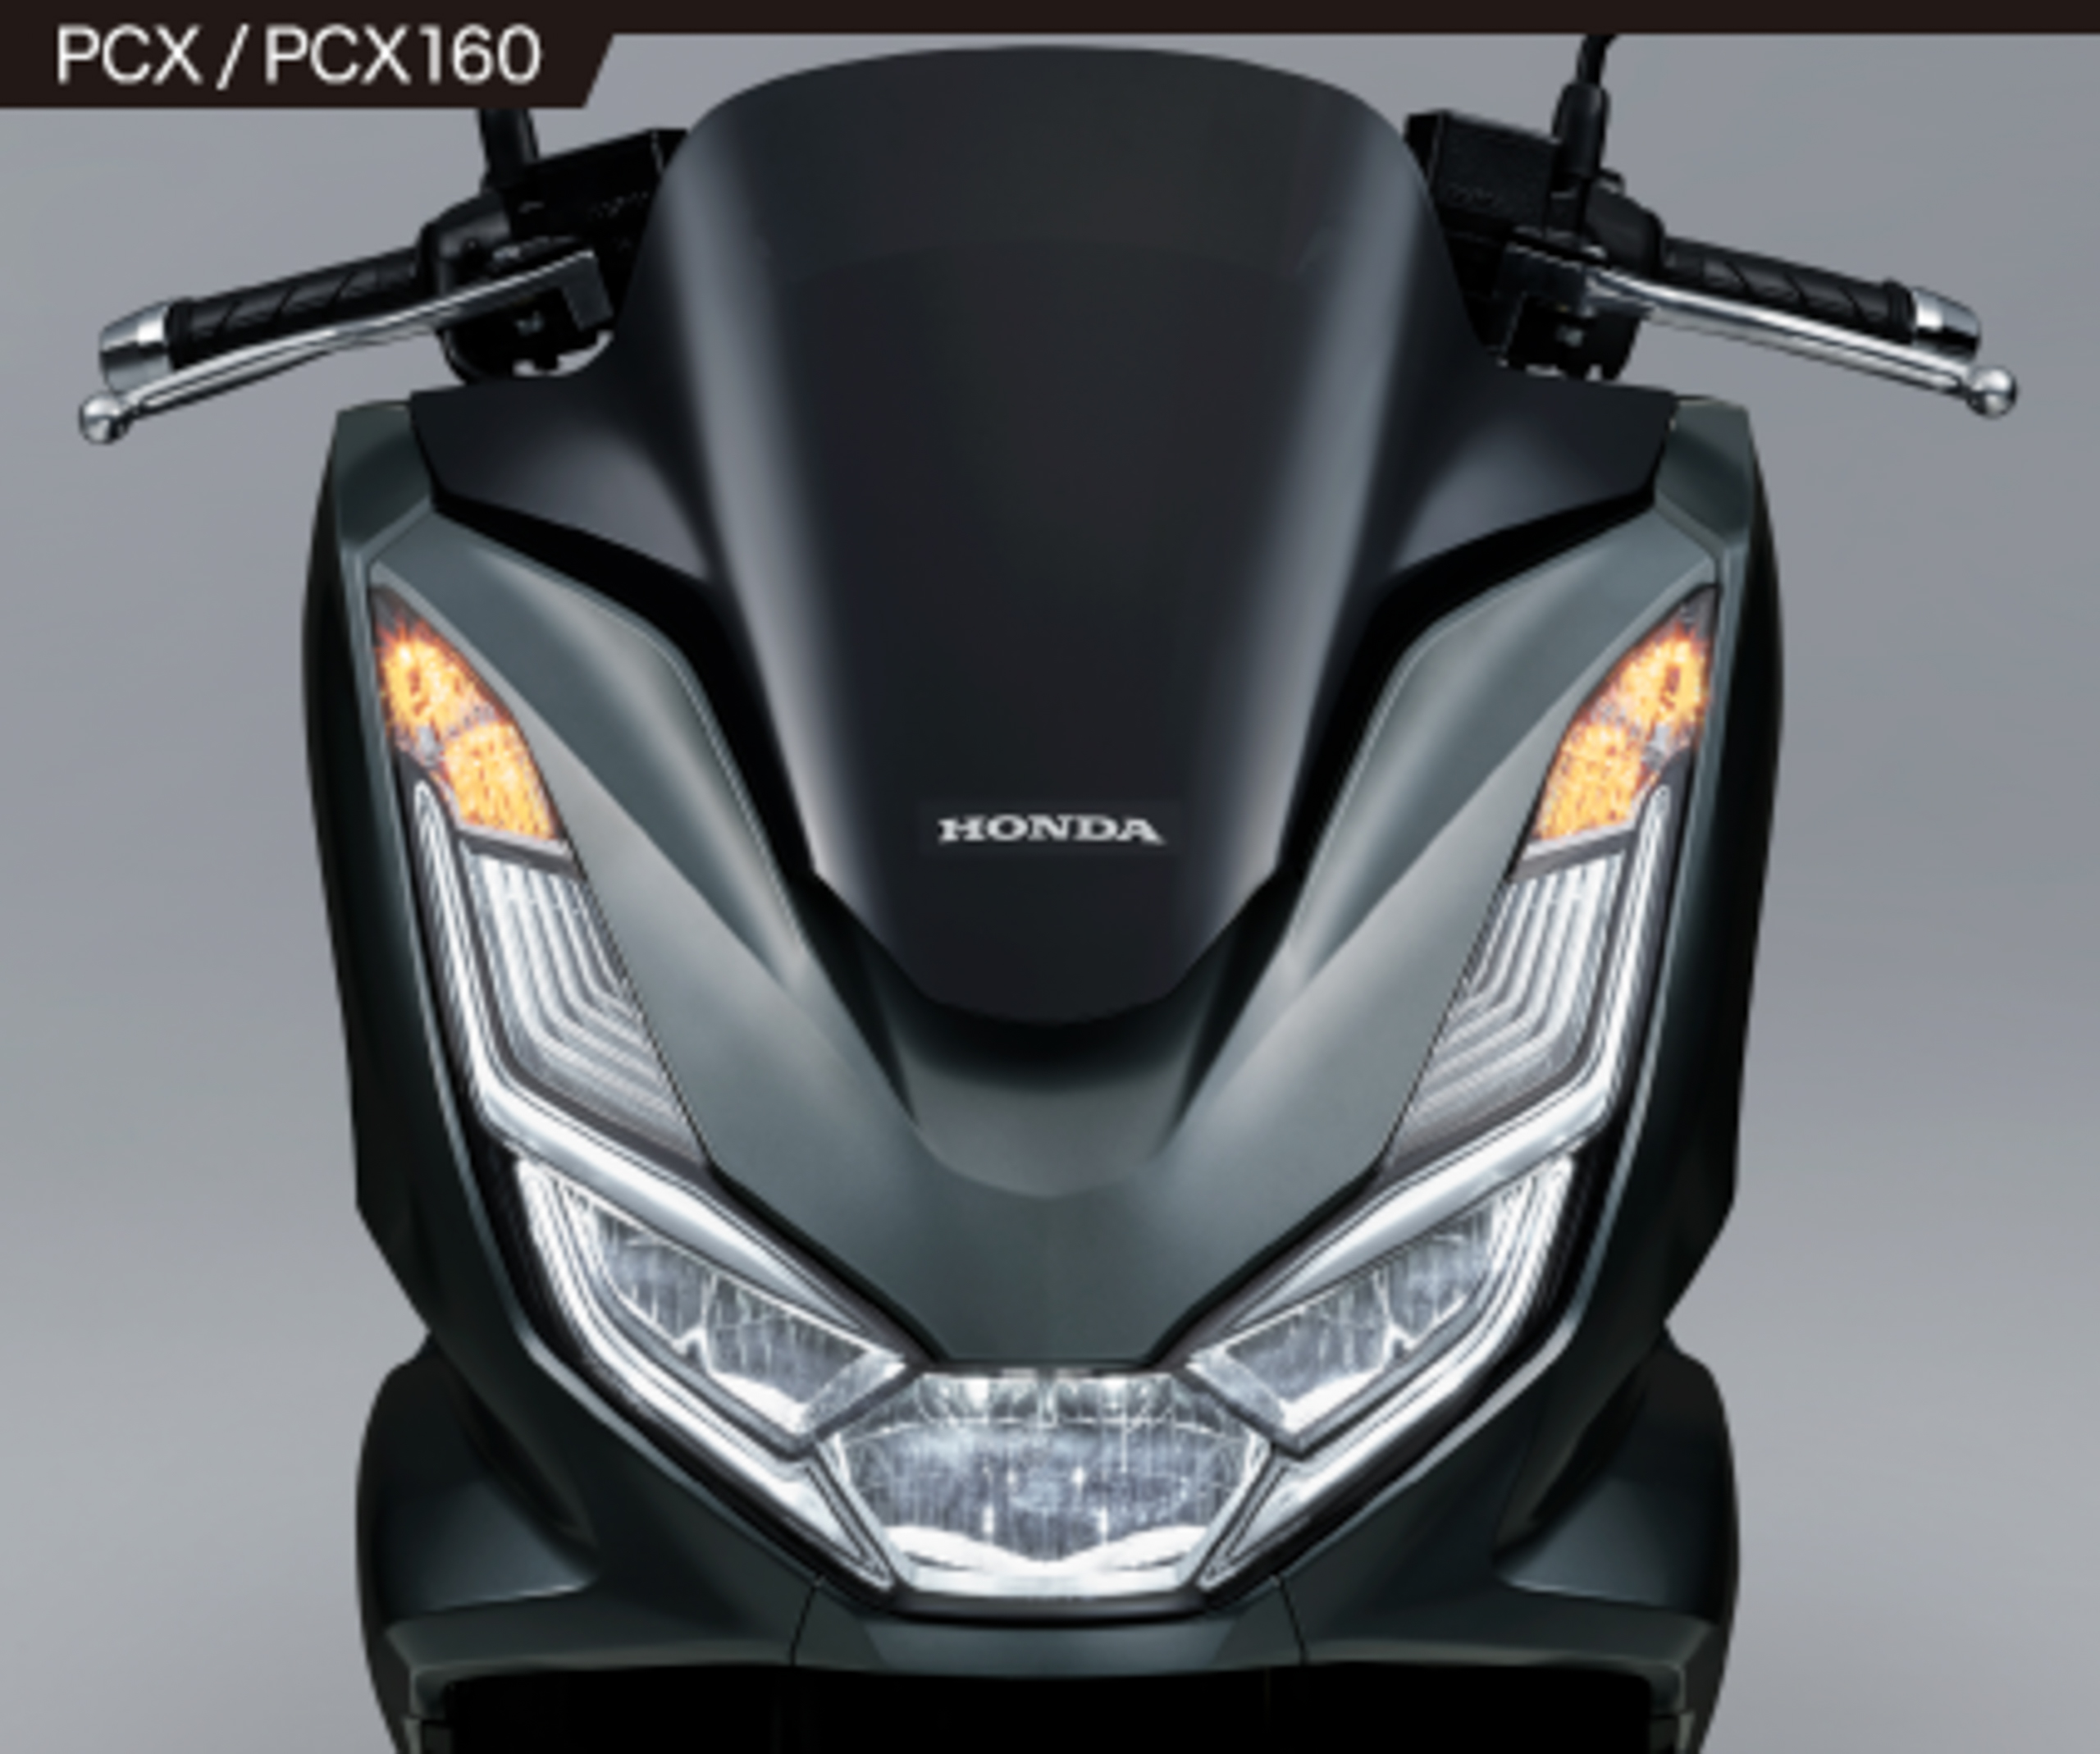 2021 Honda PCX 160 and PCX e:HEV in Japan - major overall makeover